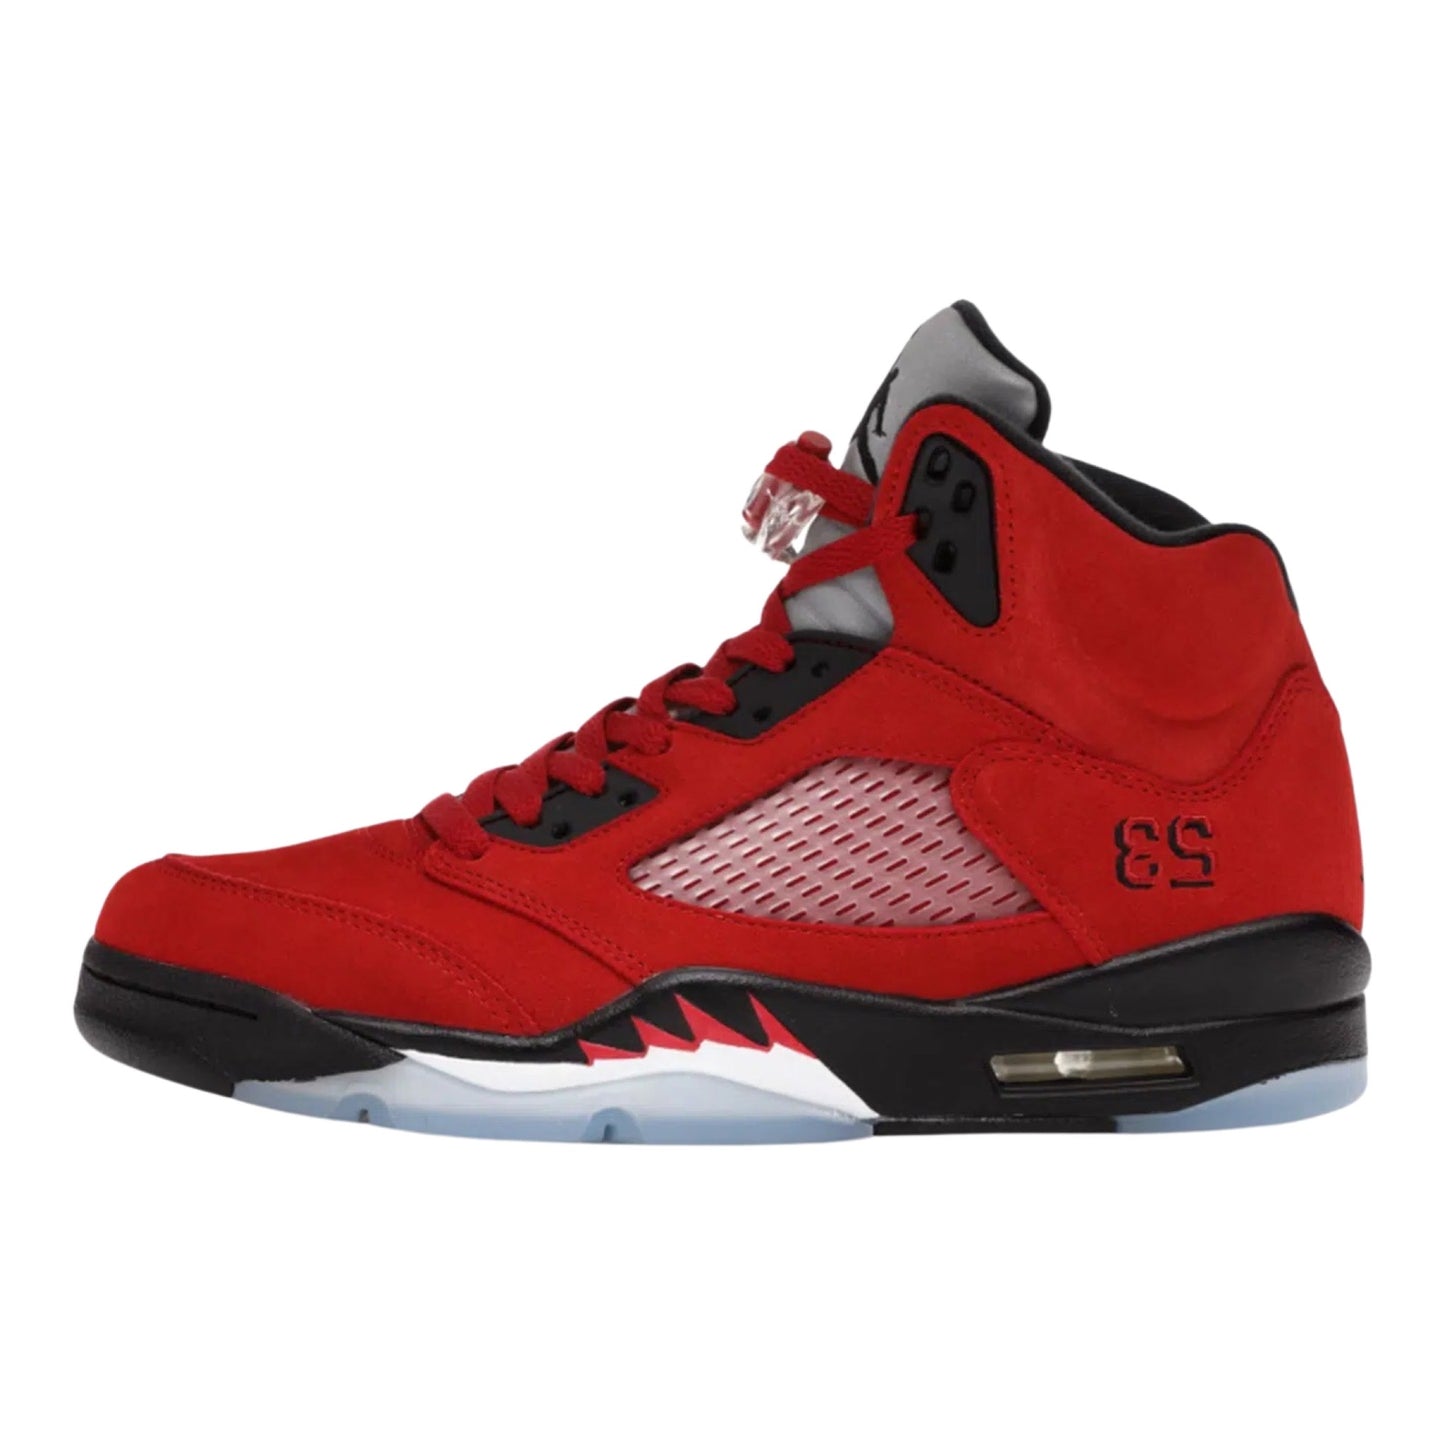 Jordan 5 Retro “Raging Bull Red”